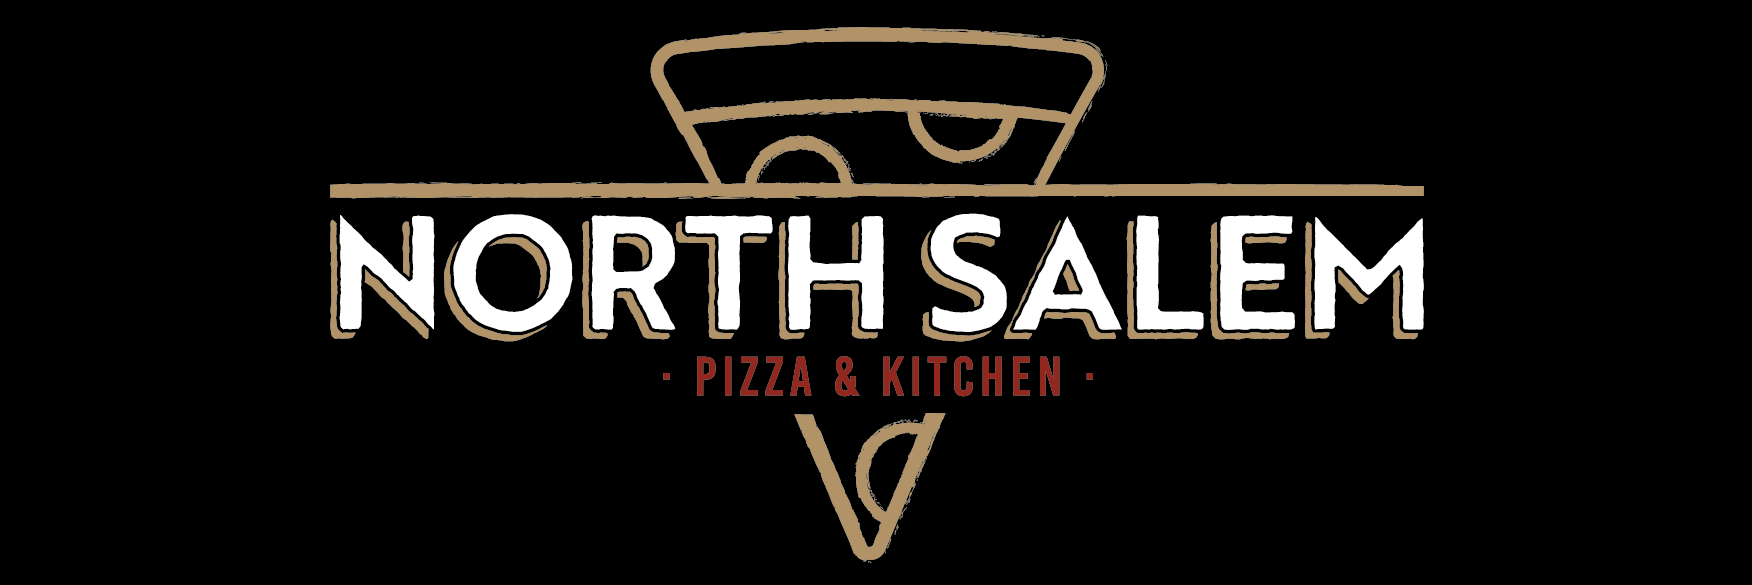 North Salem Pizza & Kitchen logo top